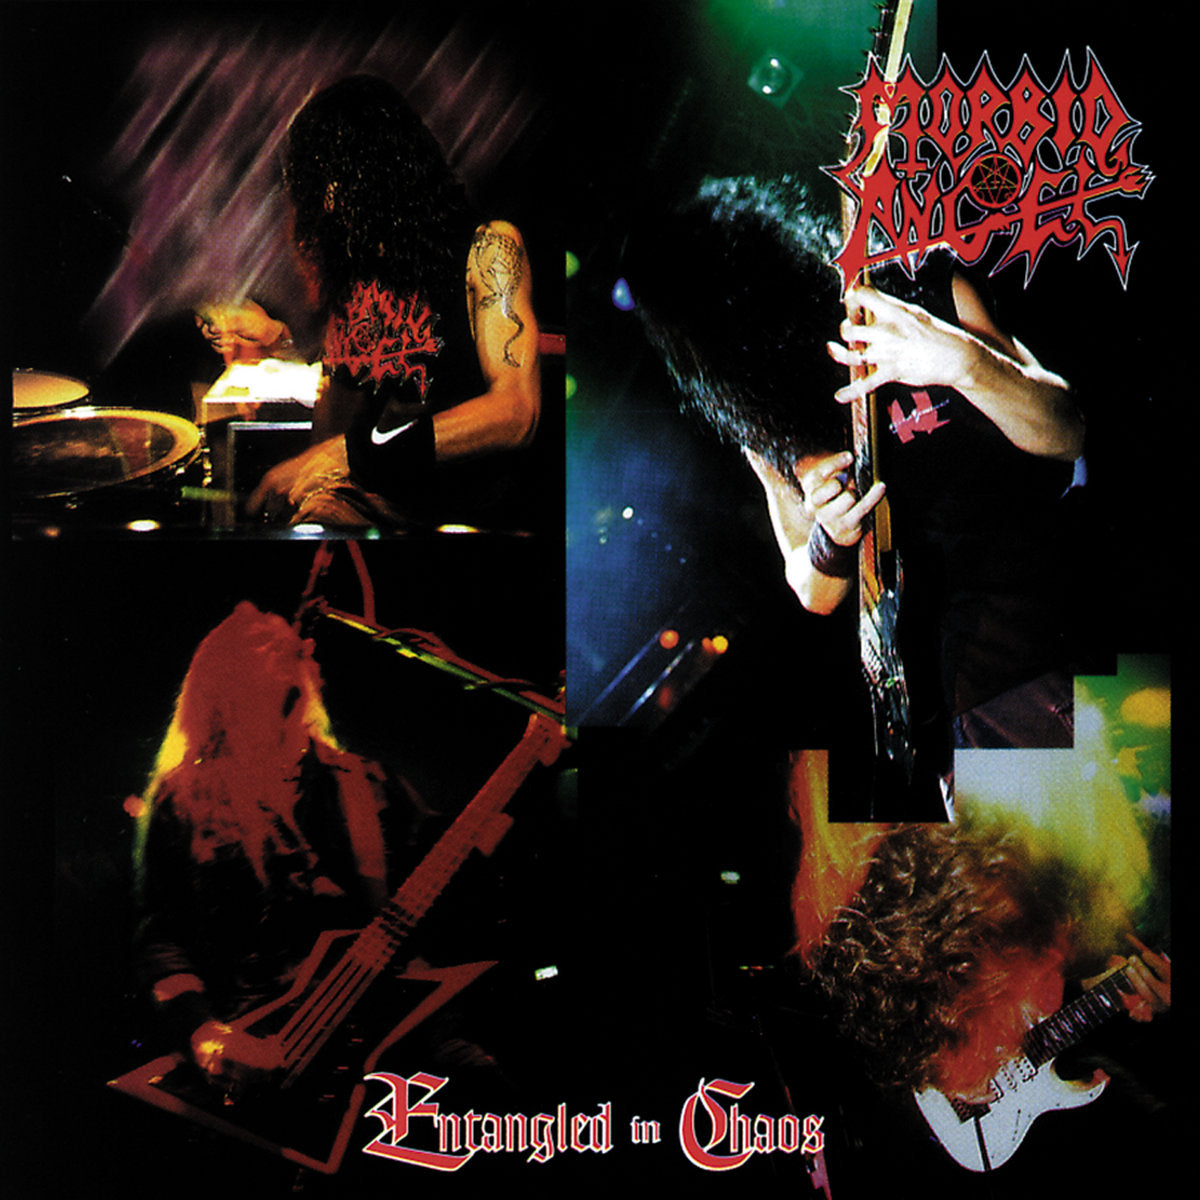 Morbid Angel "Entangled in Chaos" CD